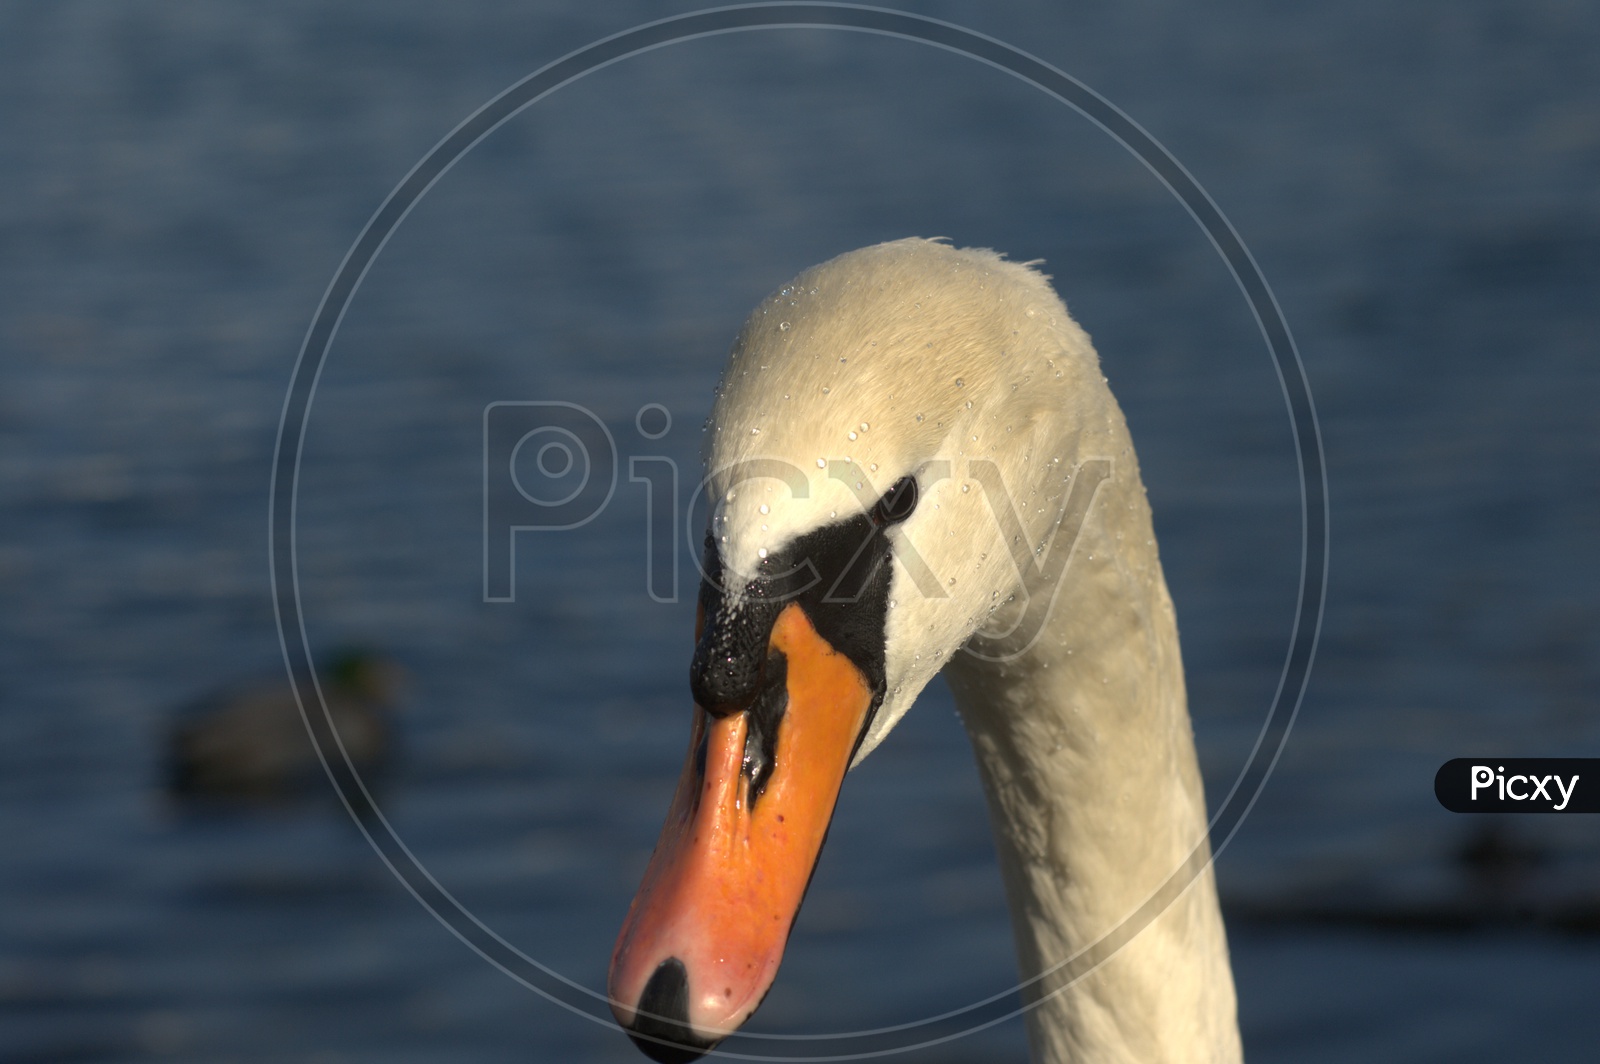 A Tundra Swan's beak